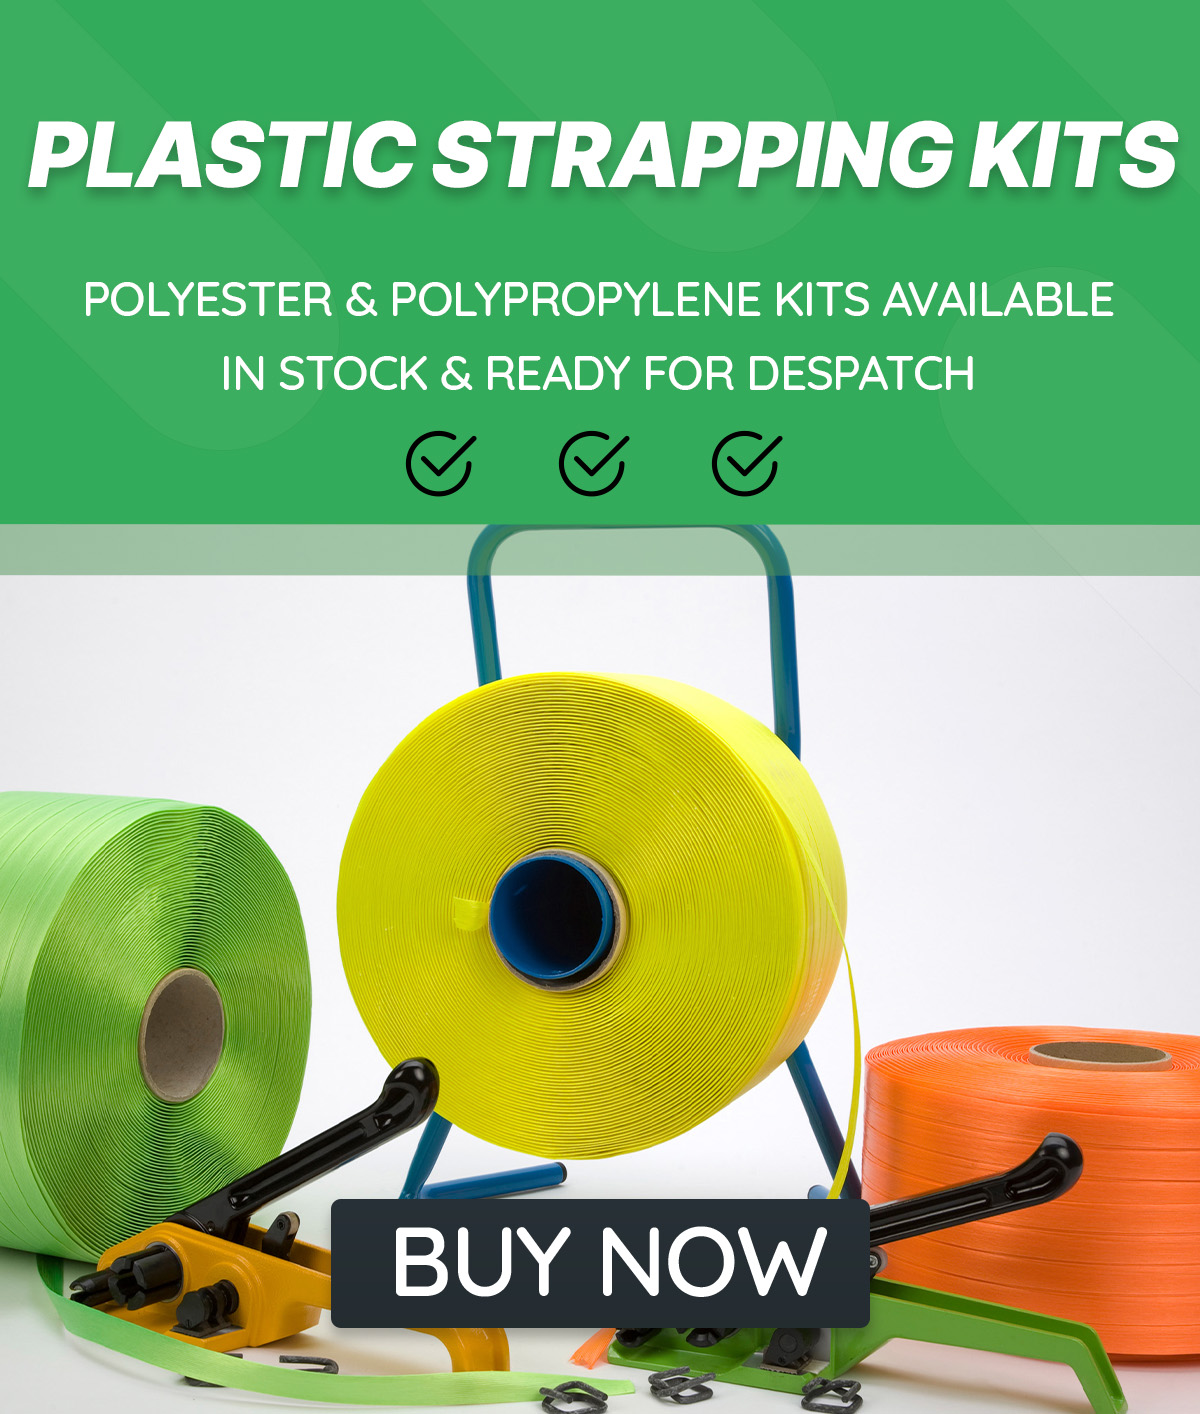 https://www.straptite.co.uk/plastic-strapping-kits